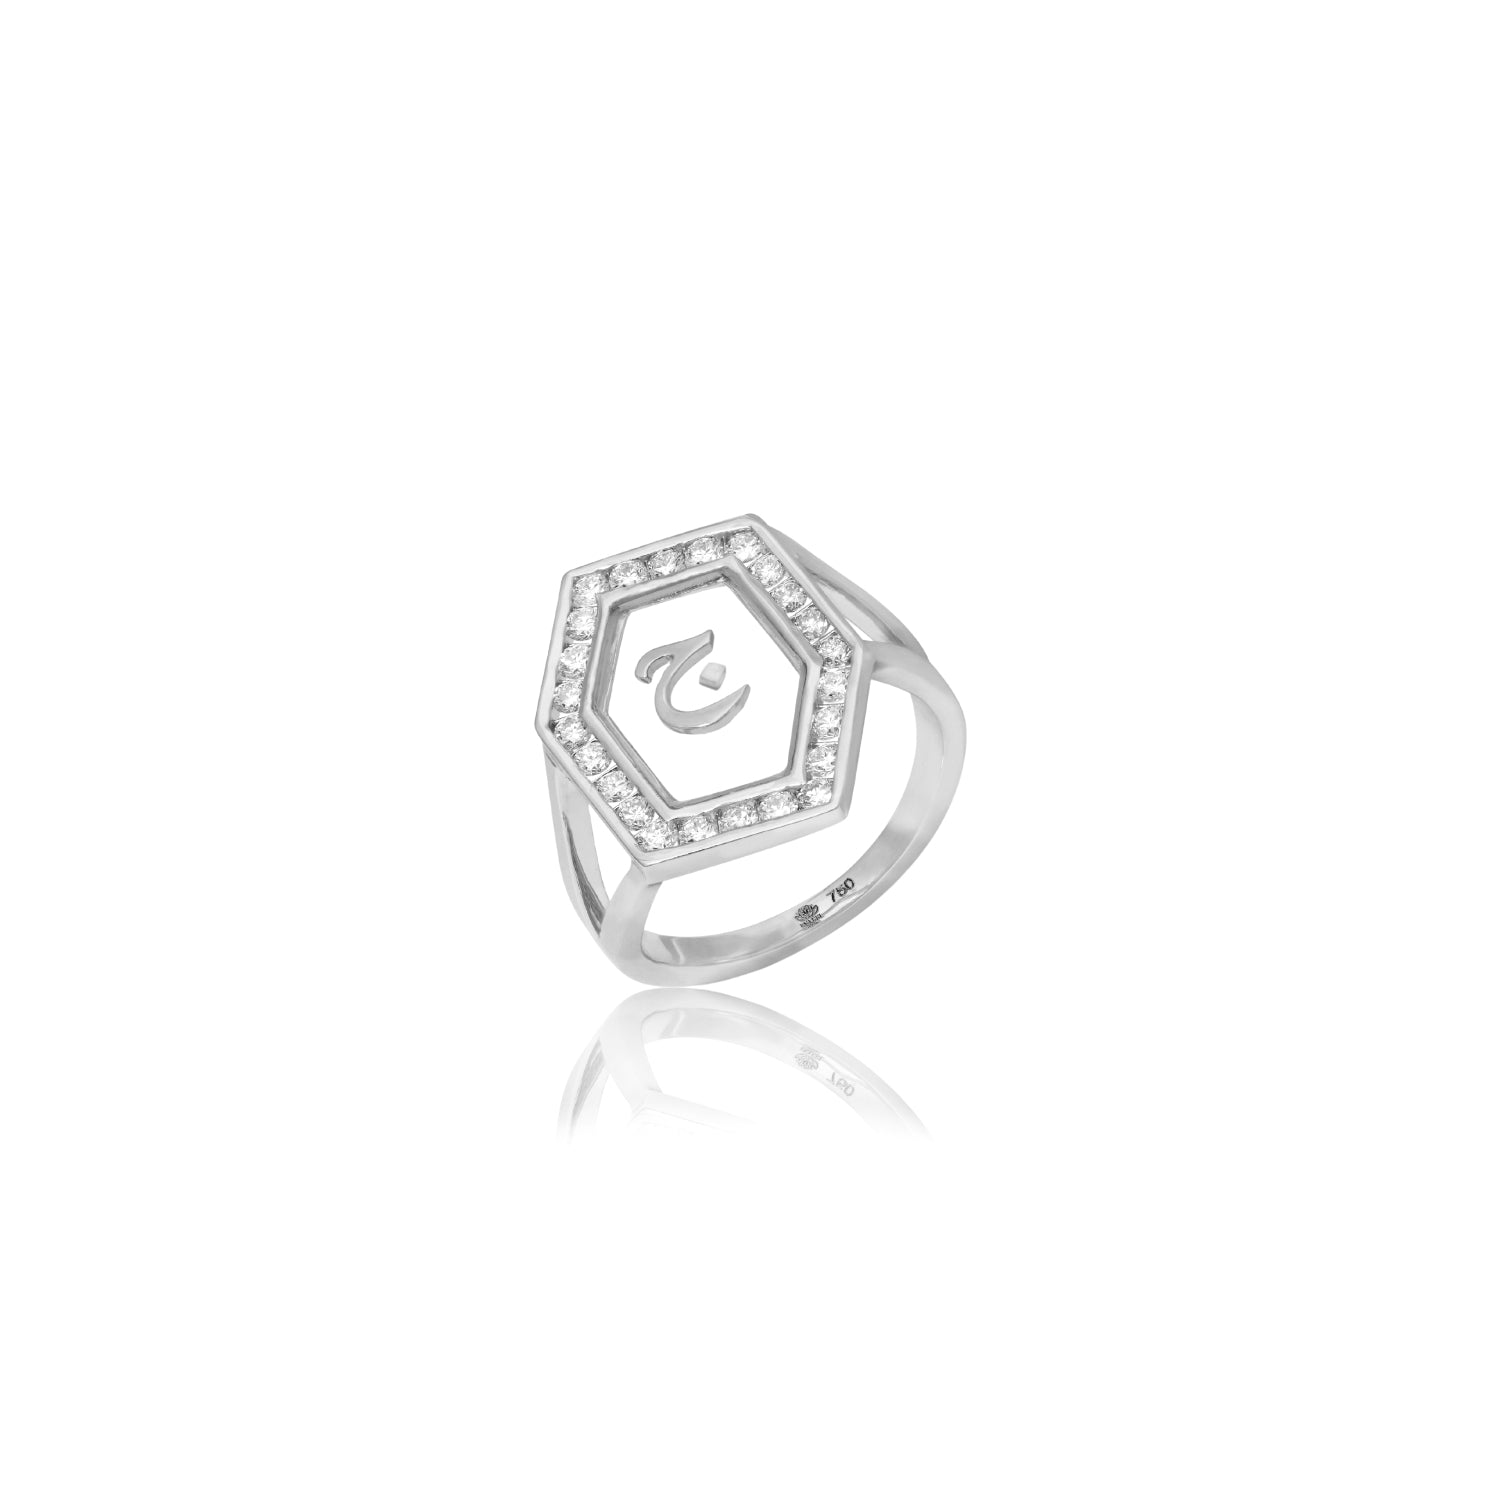 Qamoos 1.0 Letter ج Diamond Ring in White Gold